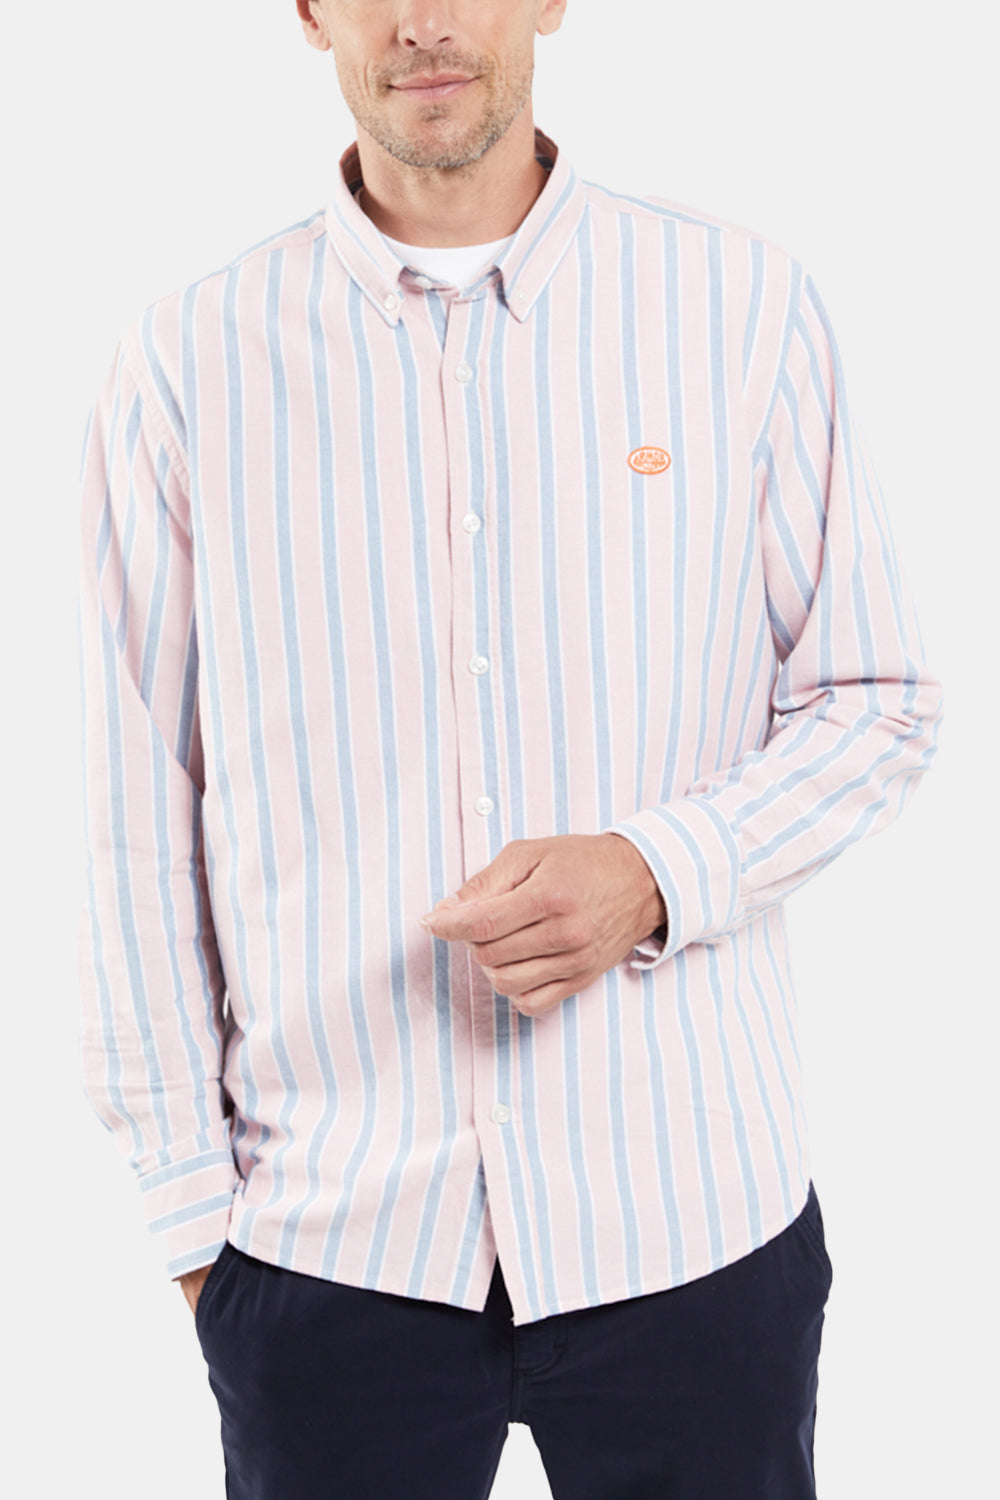 Armor Lux Oxford Stripe Henley Shirt (Pink White Blue)